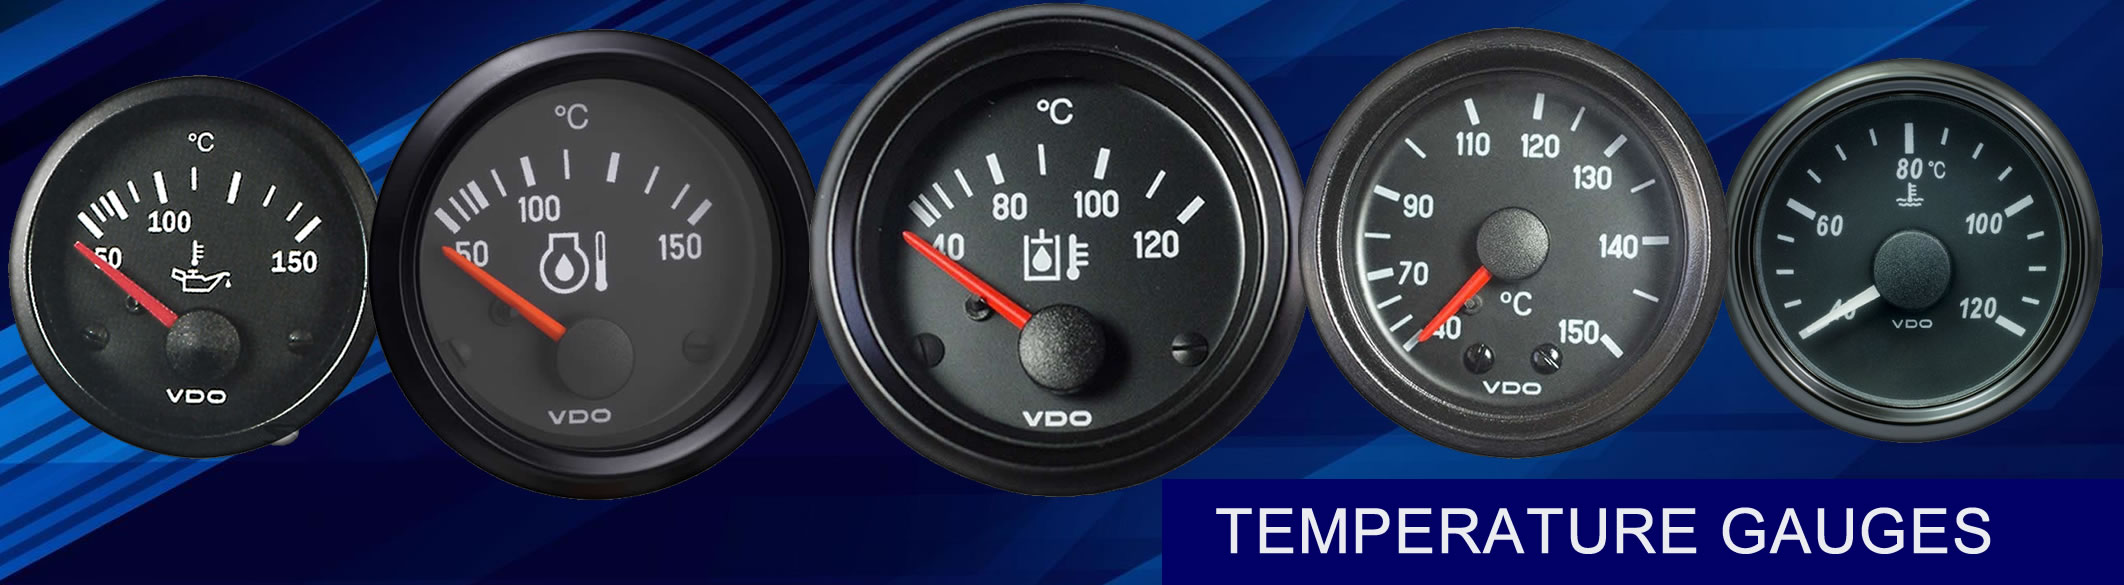 vdo temperature gauges-banner